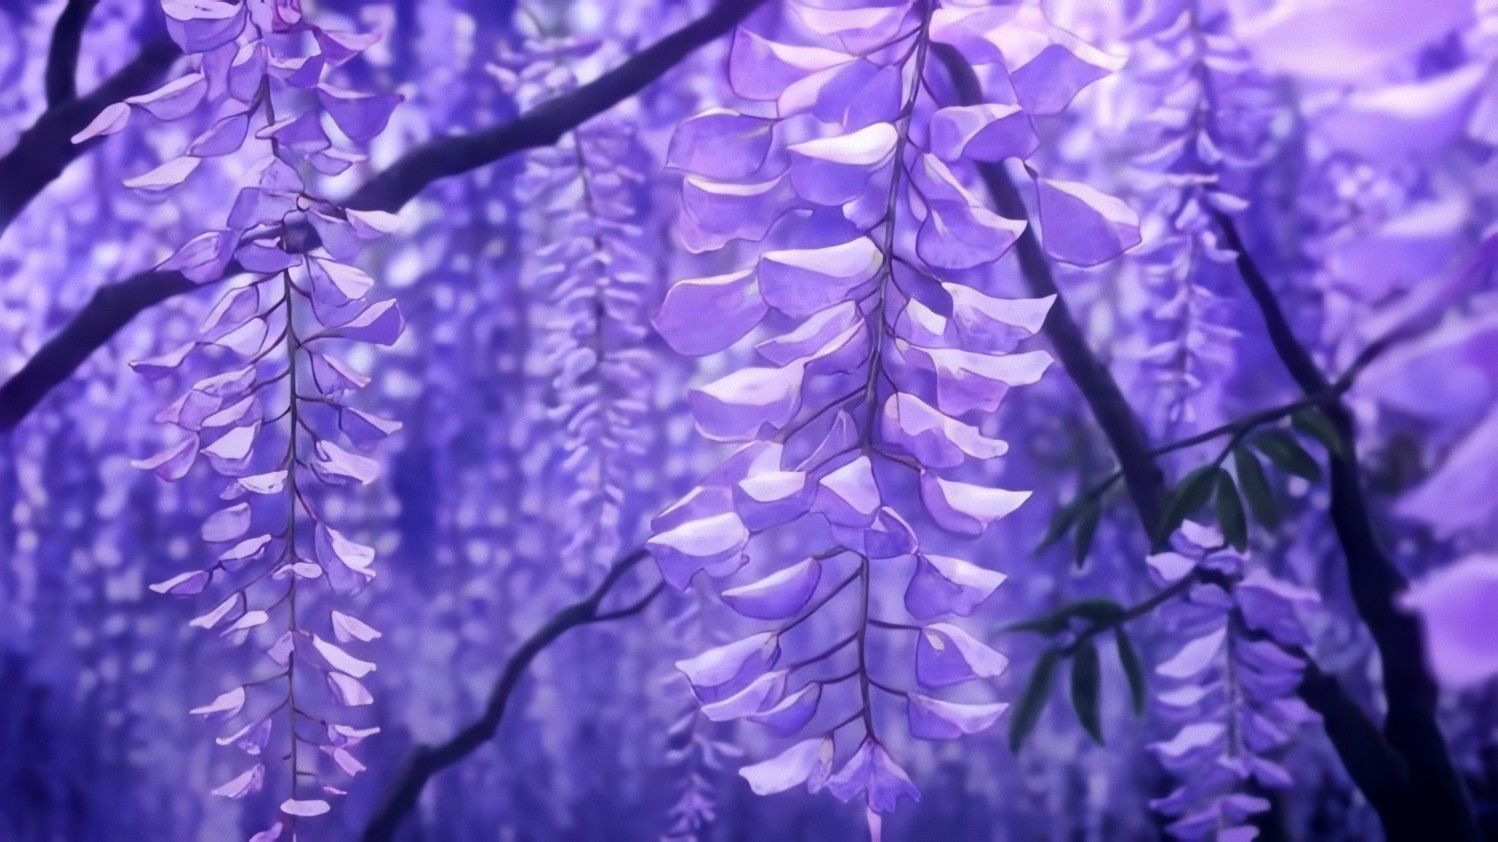 Drxppy Richh on Twitter. Anime flower, Anime scenery, Purple wisteria